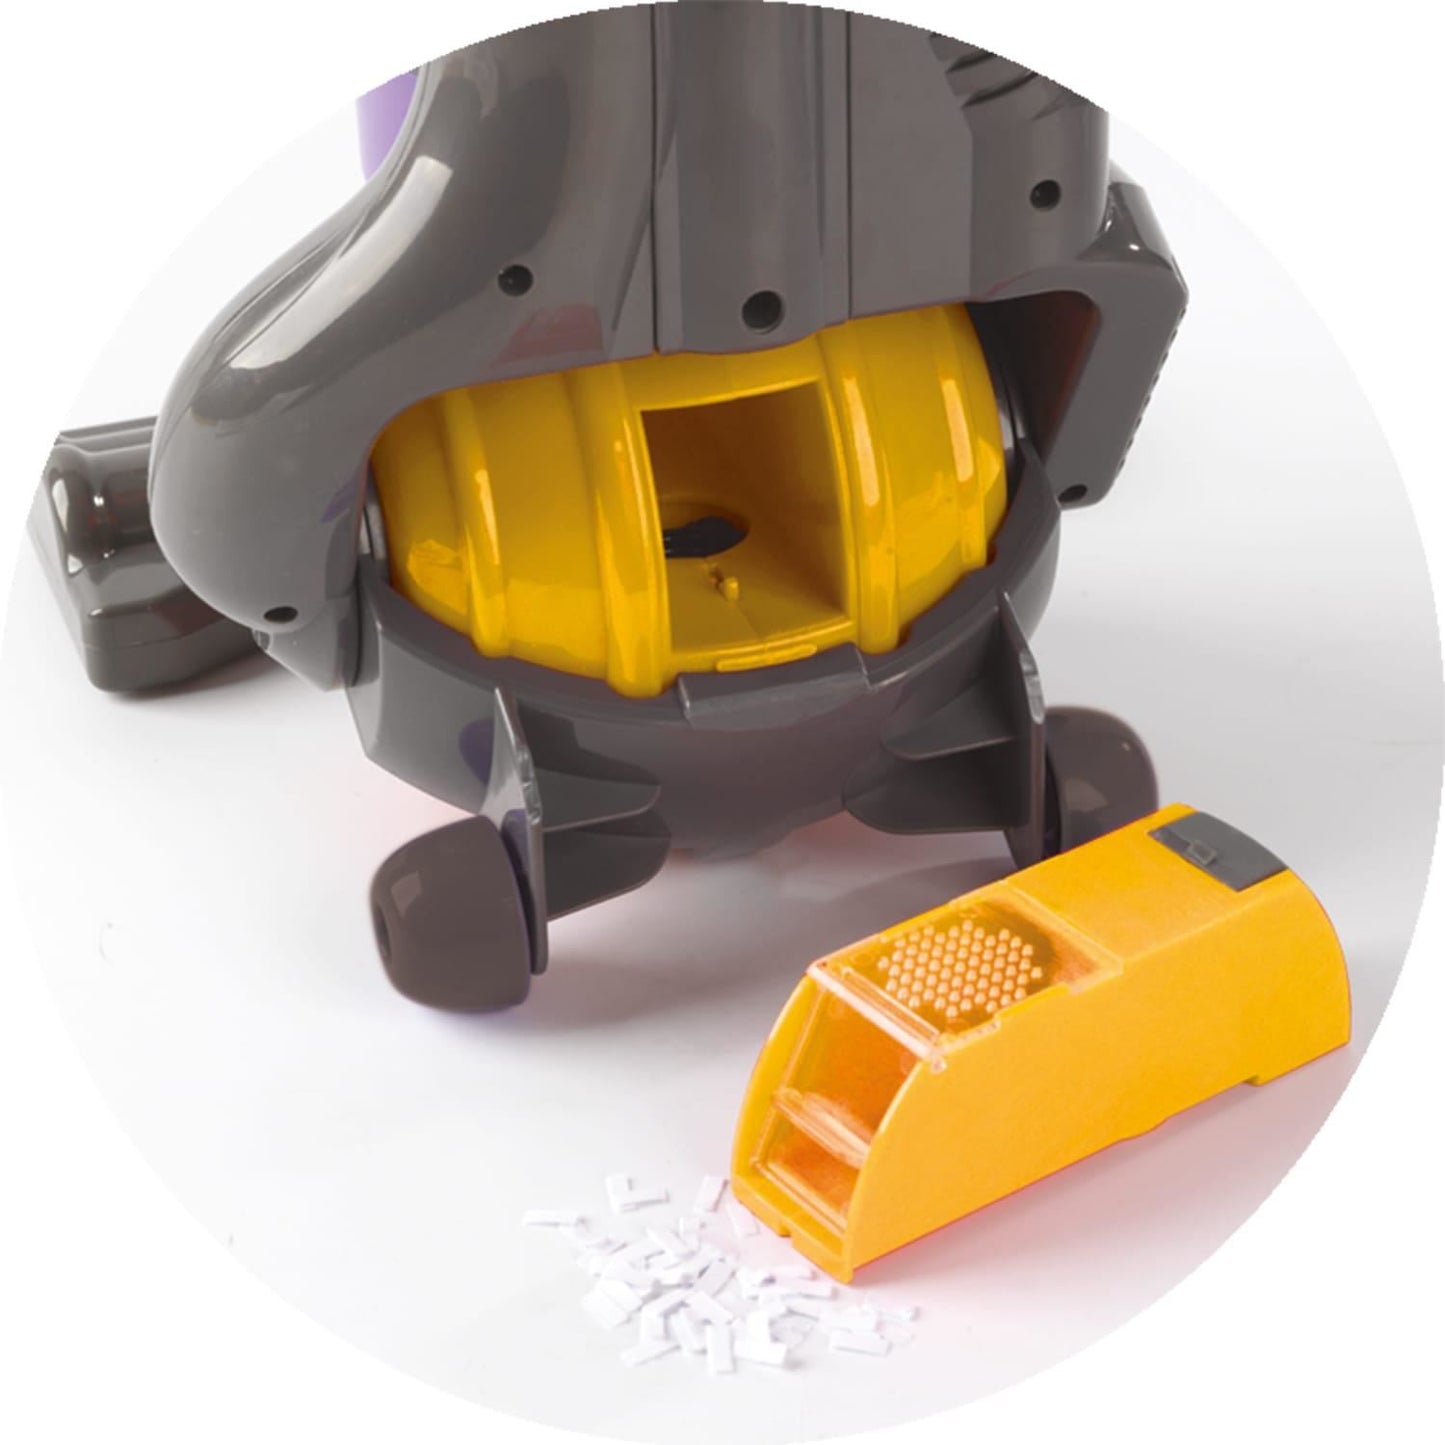 Dyson Ball Vacuum Toy